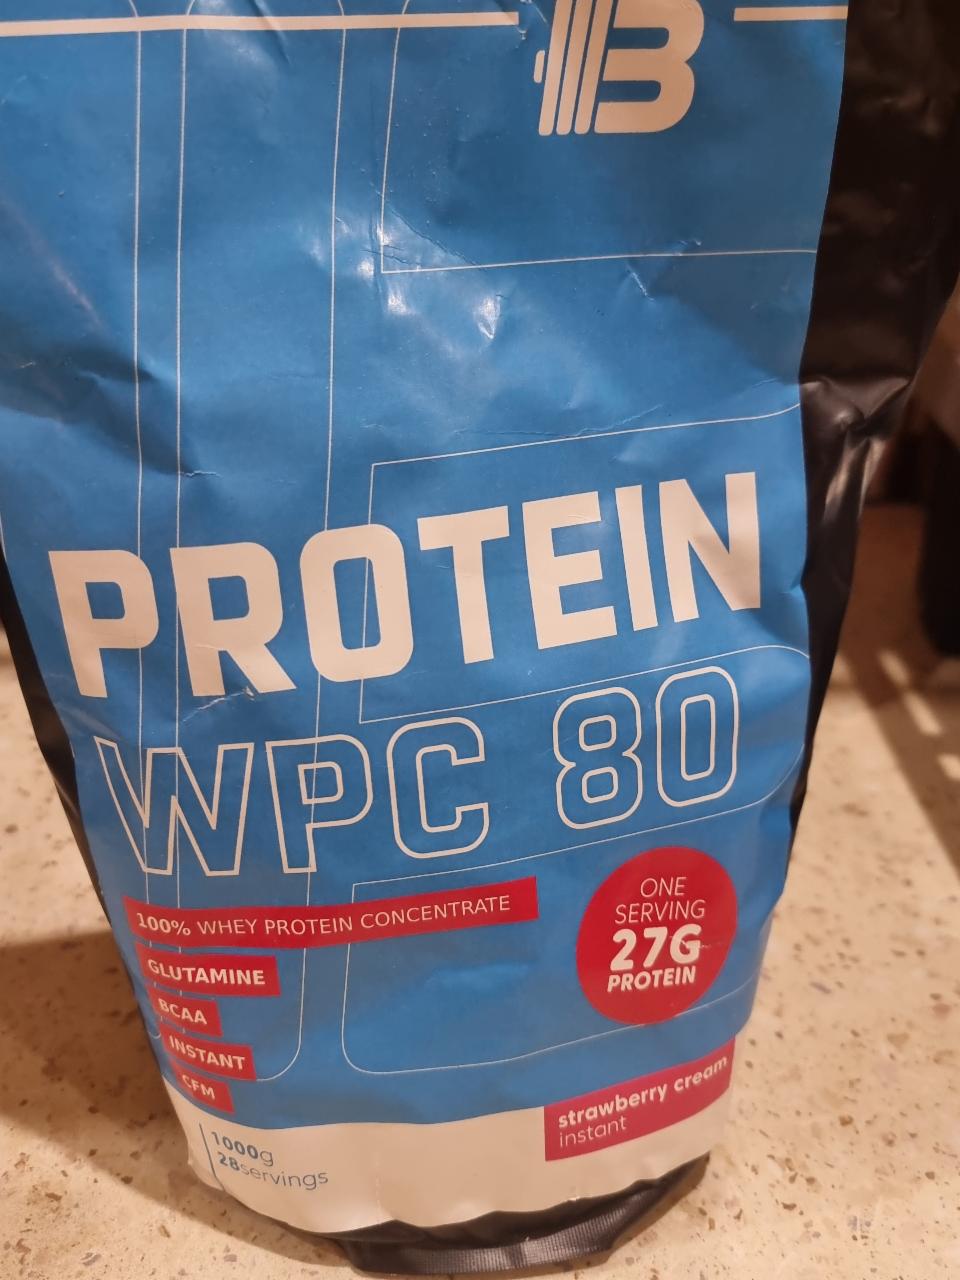 Fotografie - protein wpc 80 strawberry cream